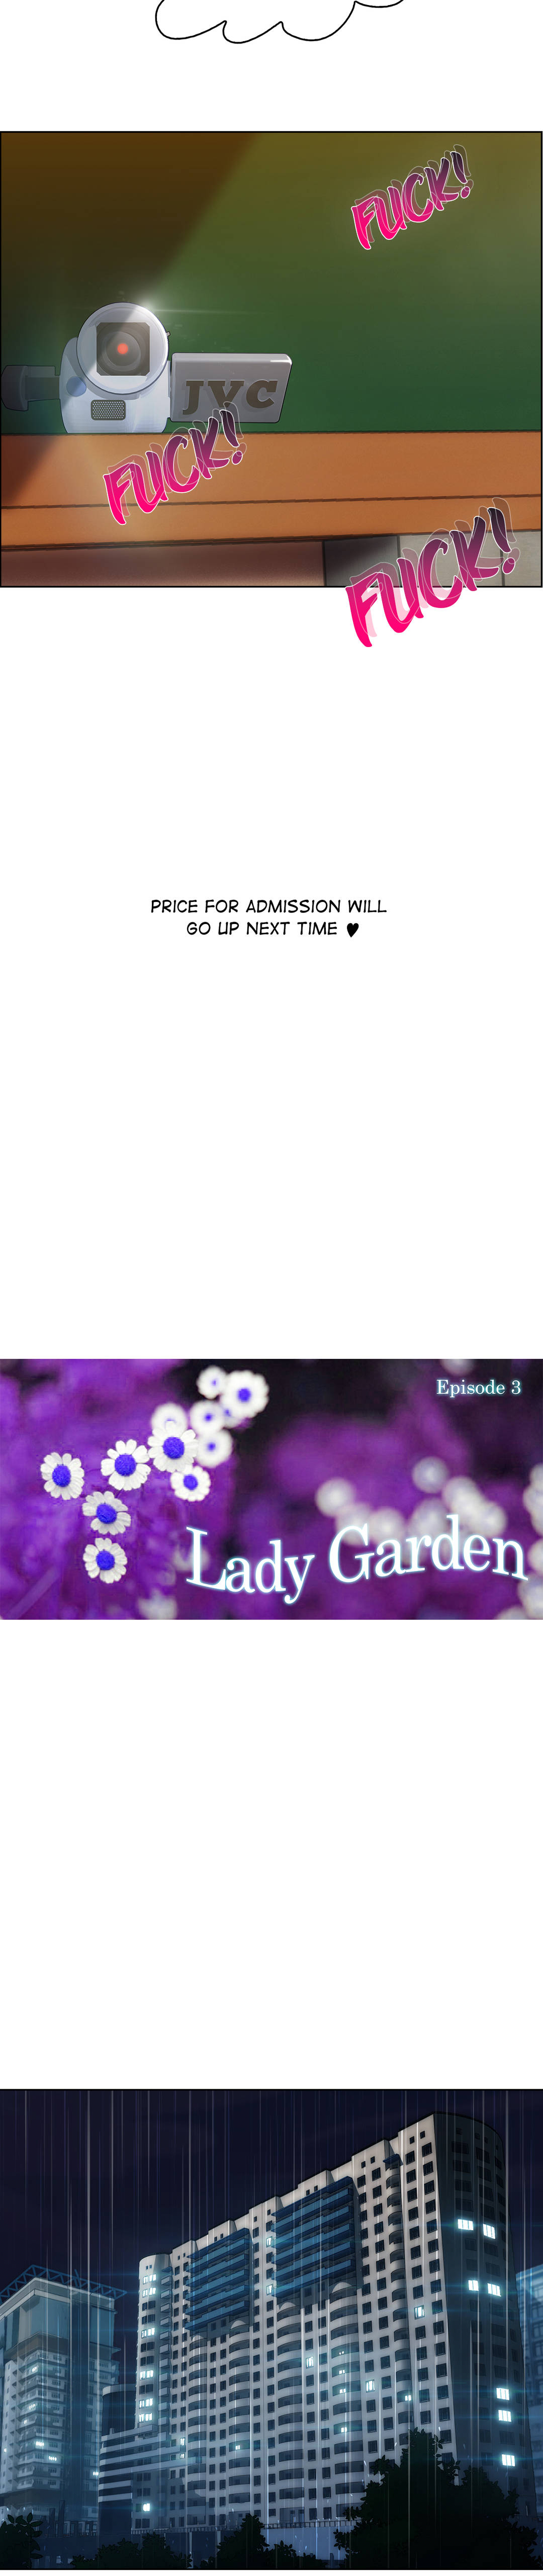 Lady Garden image